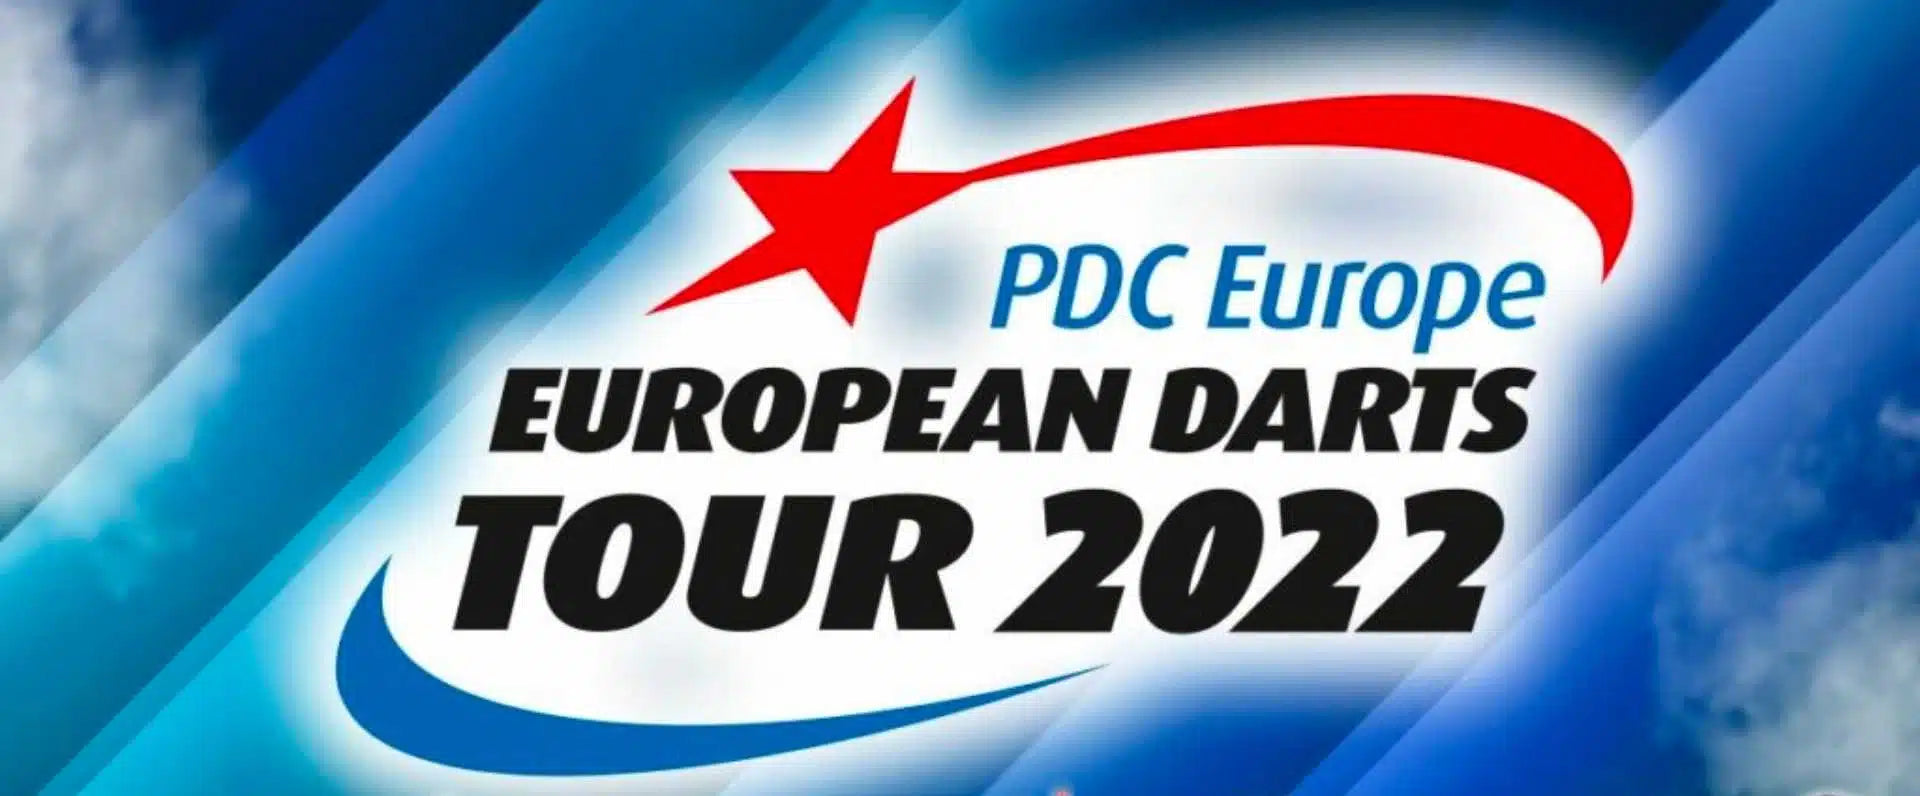 darts european tour 2022 live